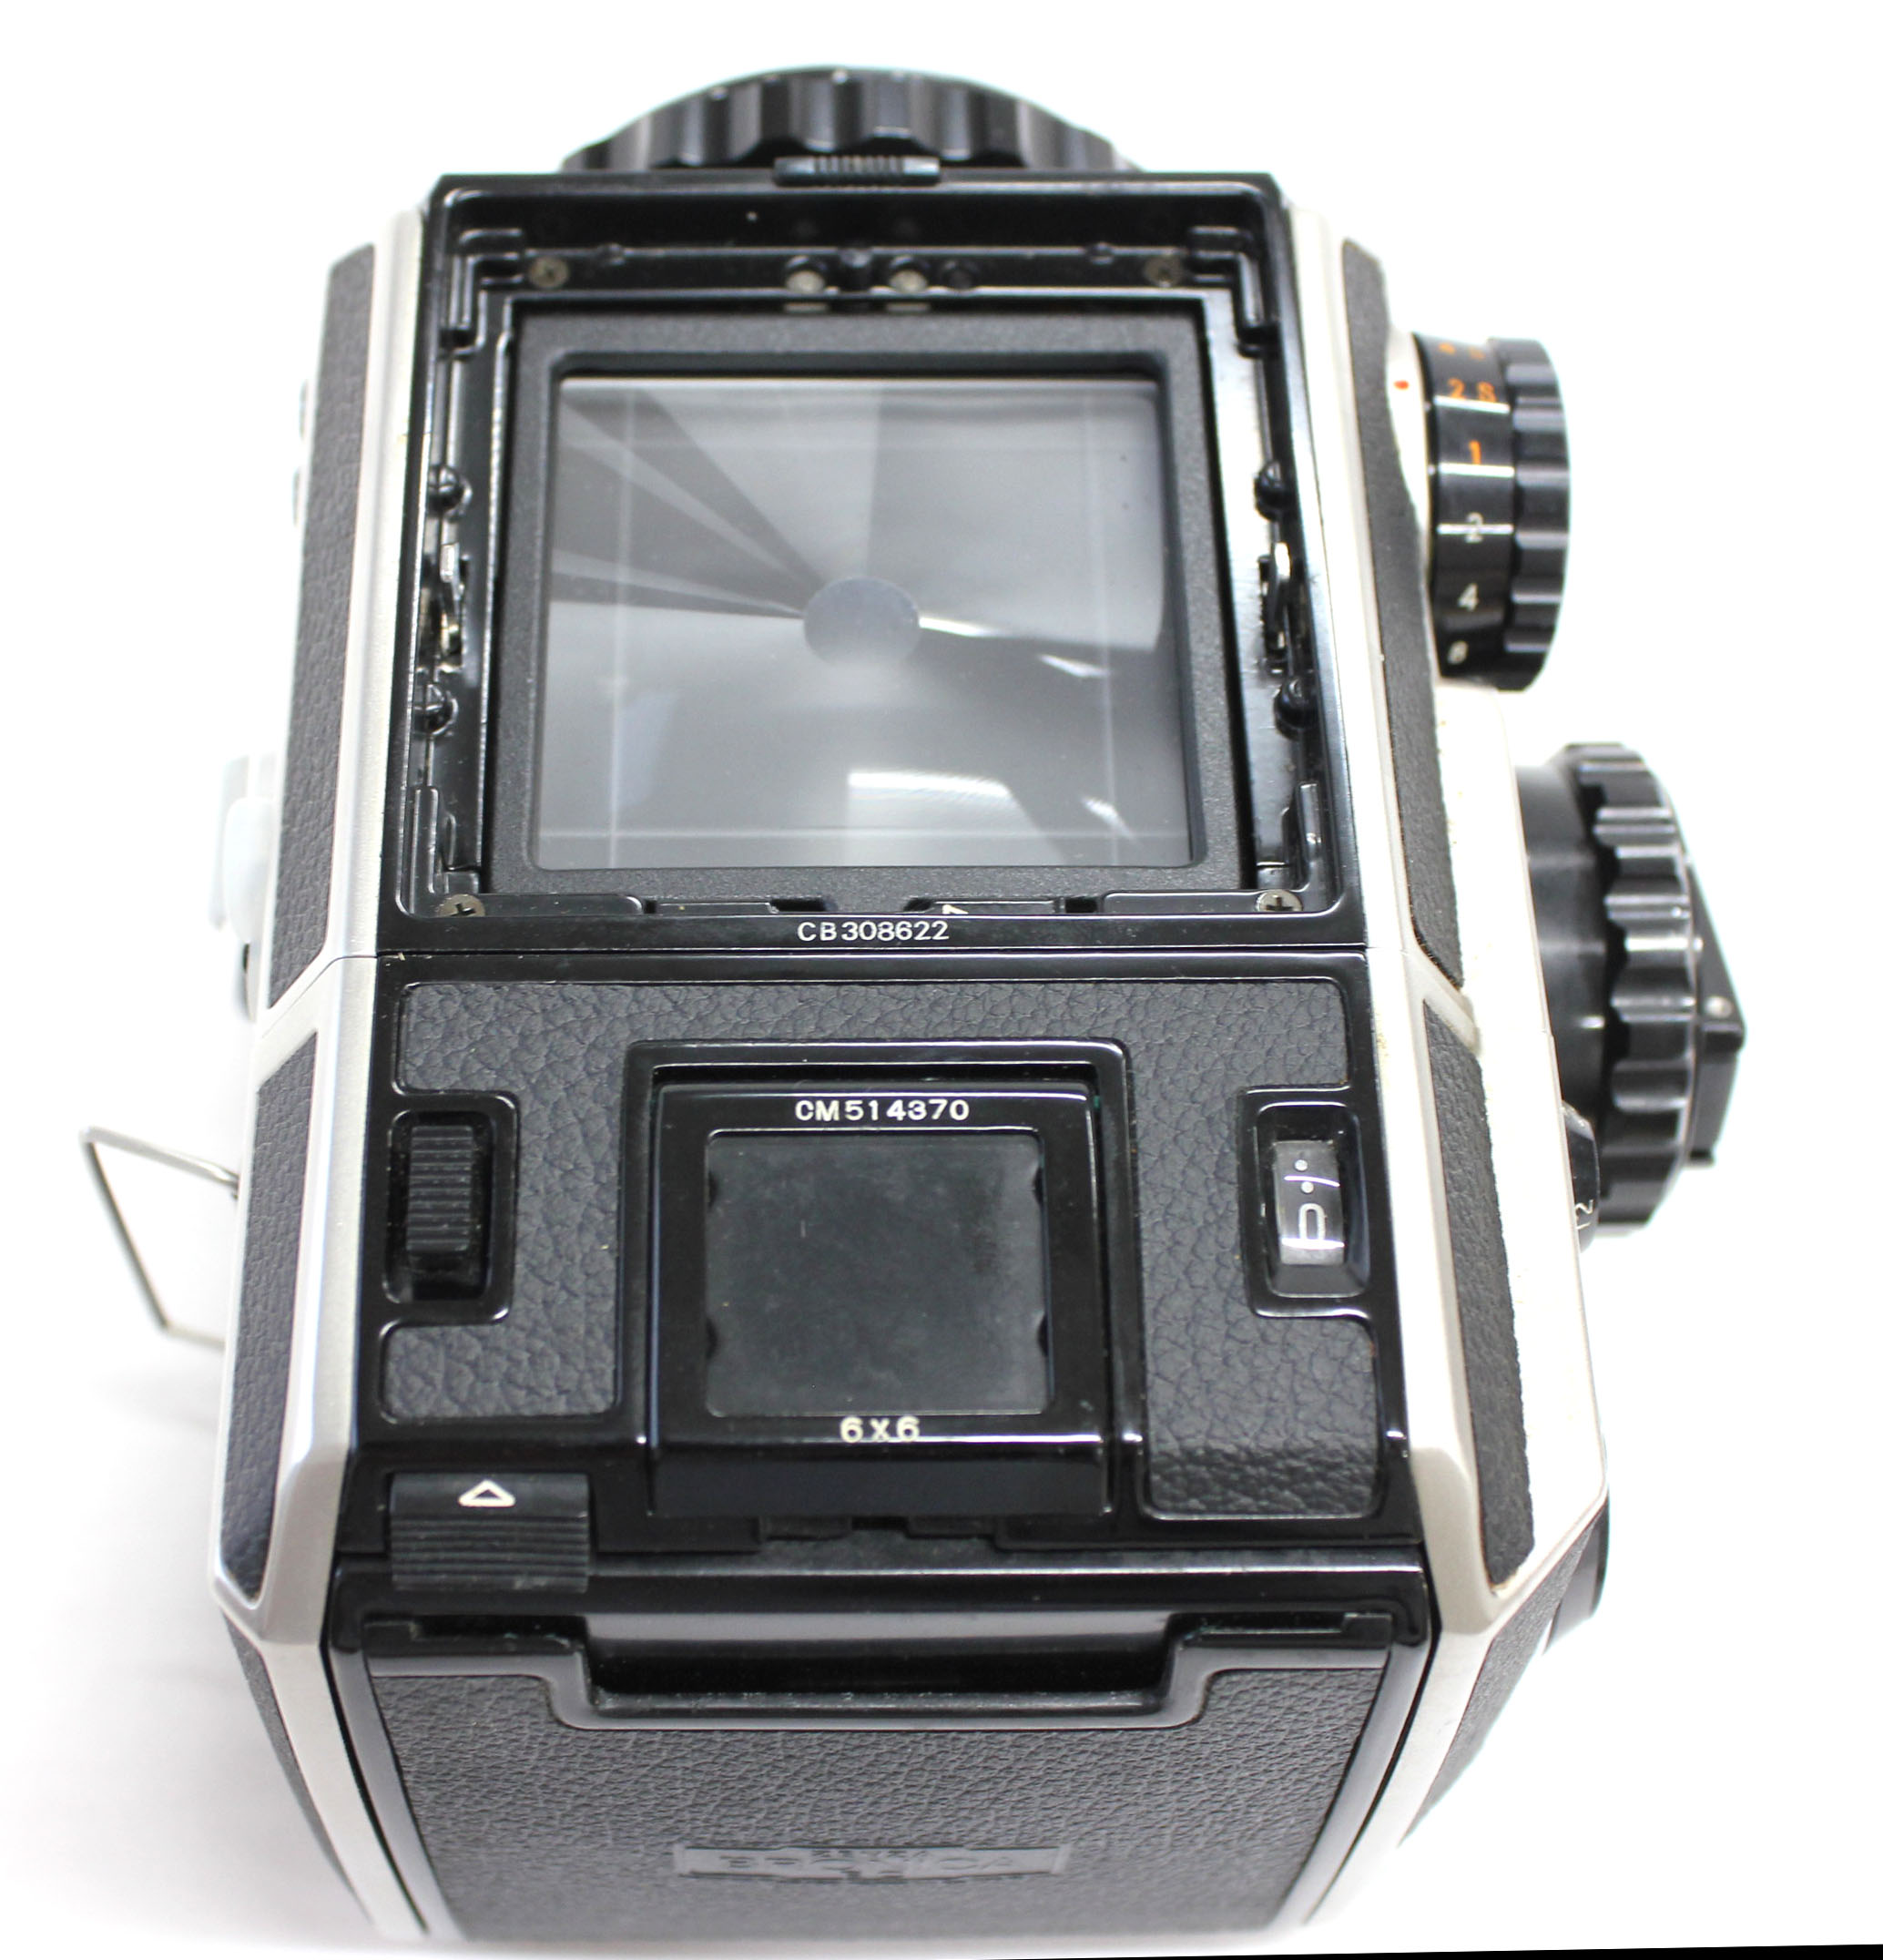  Zenza Bronica EC 6x6 Medium Format Camera w/ Nikkor-P 75mm F/2.8 Lens from Japan Photo 7